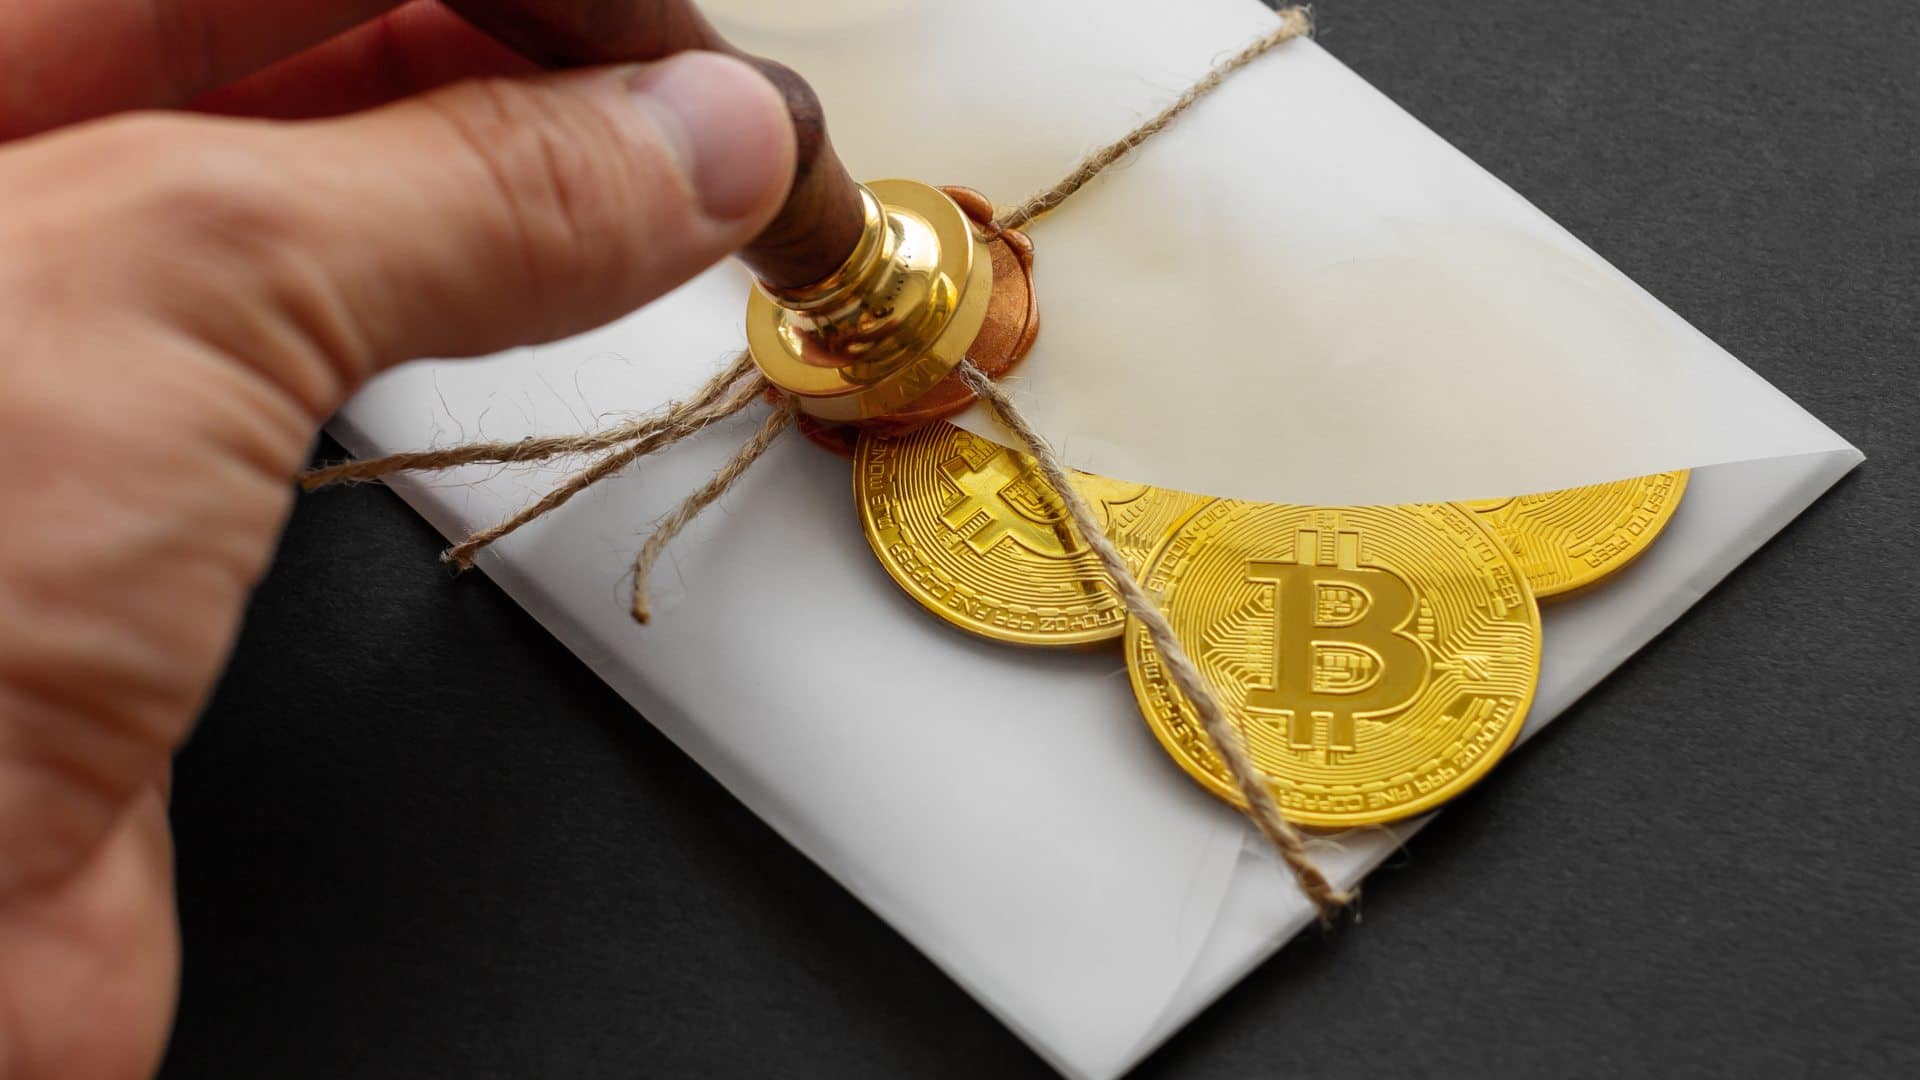 Bakkt new Bitcoin futures contracts